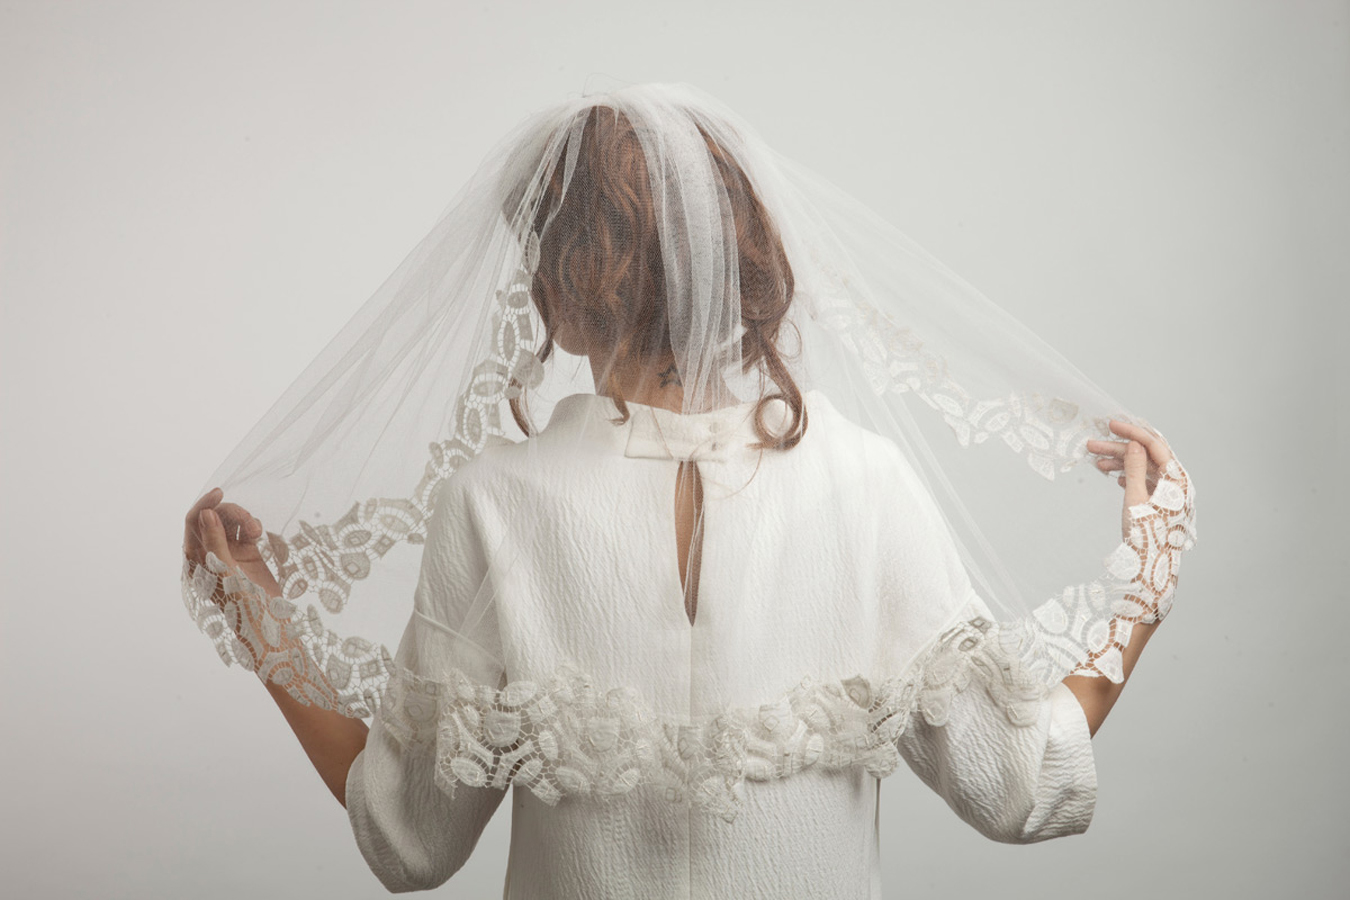 https://149451308.v2.pressablecdn.com/wp-content/uploads/2018/12/20-Unique-Wedding-Veils-Ann-Marie-Faulkner-Designer-Trim-Veil-3.jpg